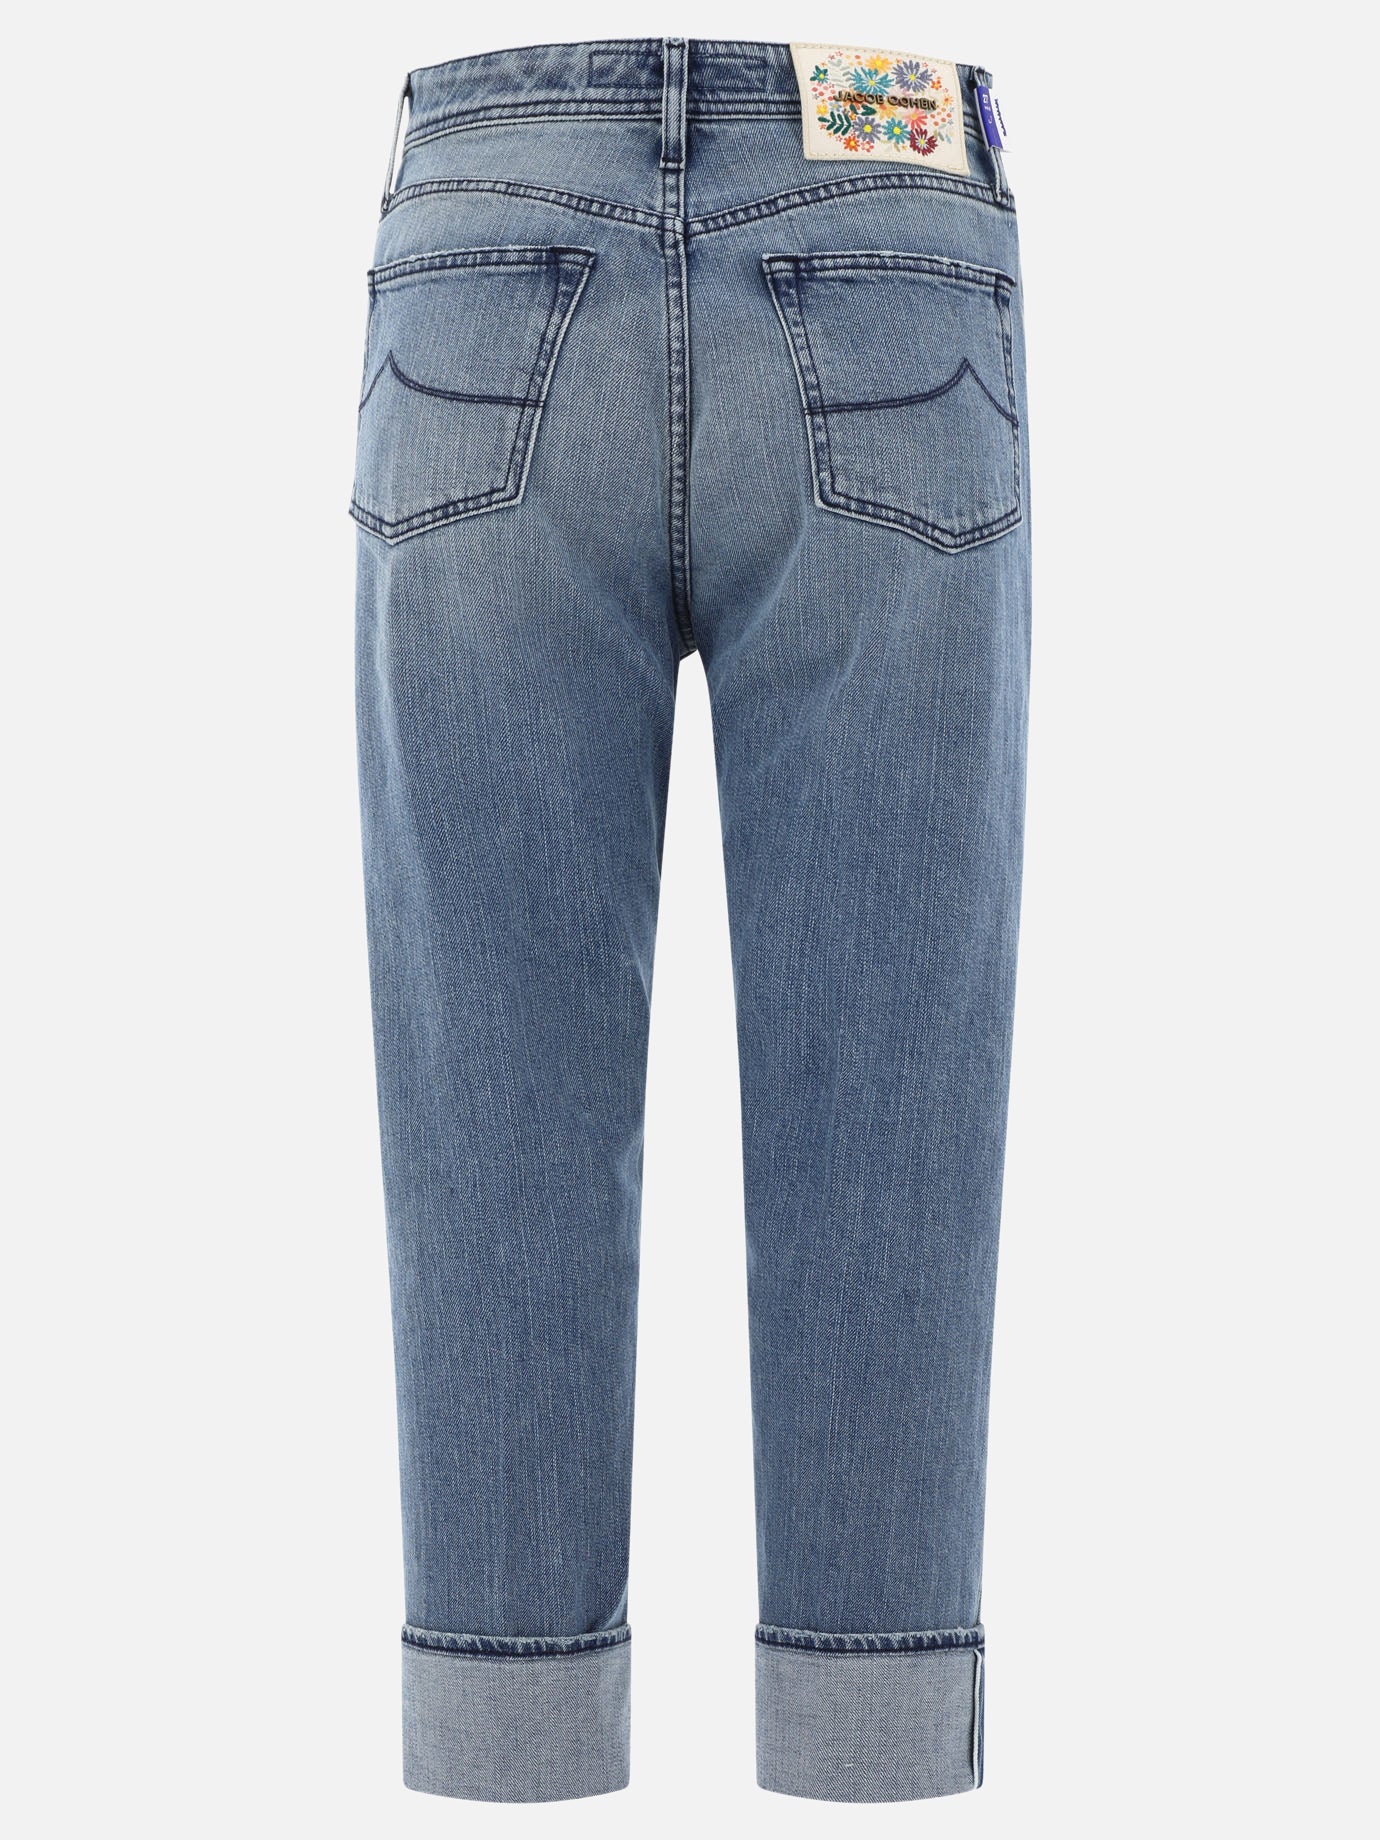 "Jane" selvedge jeans